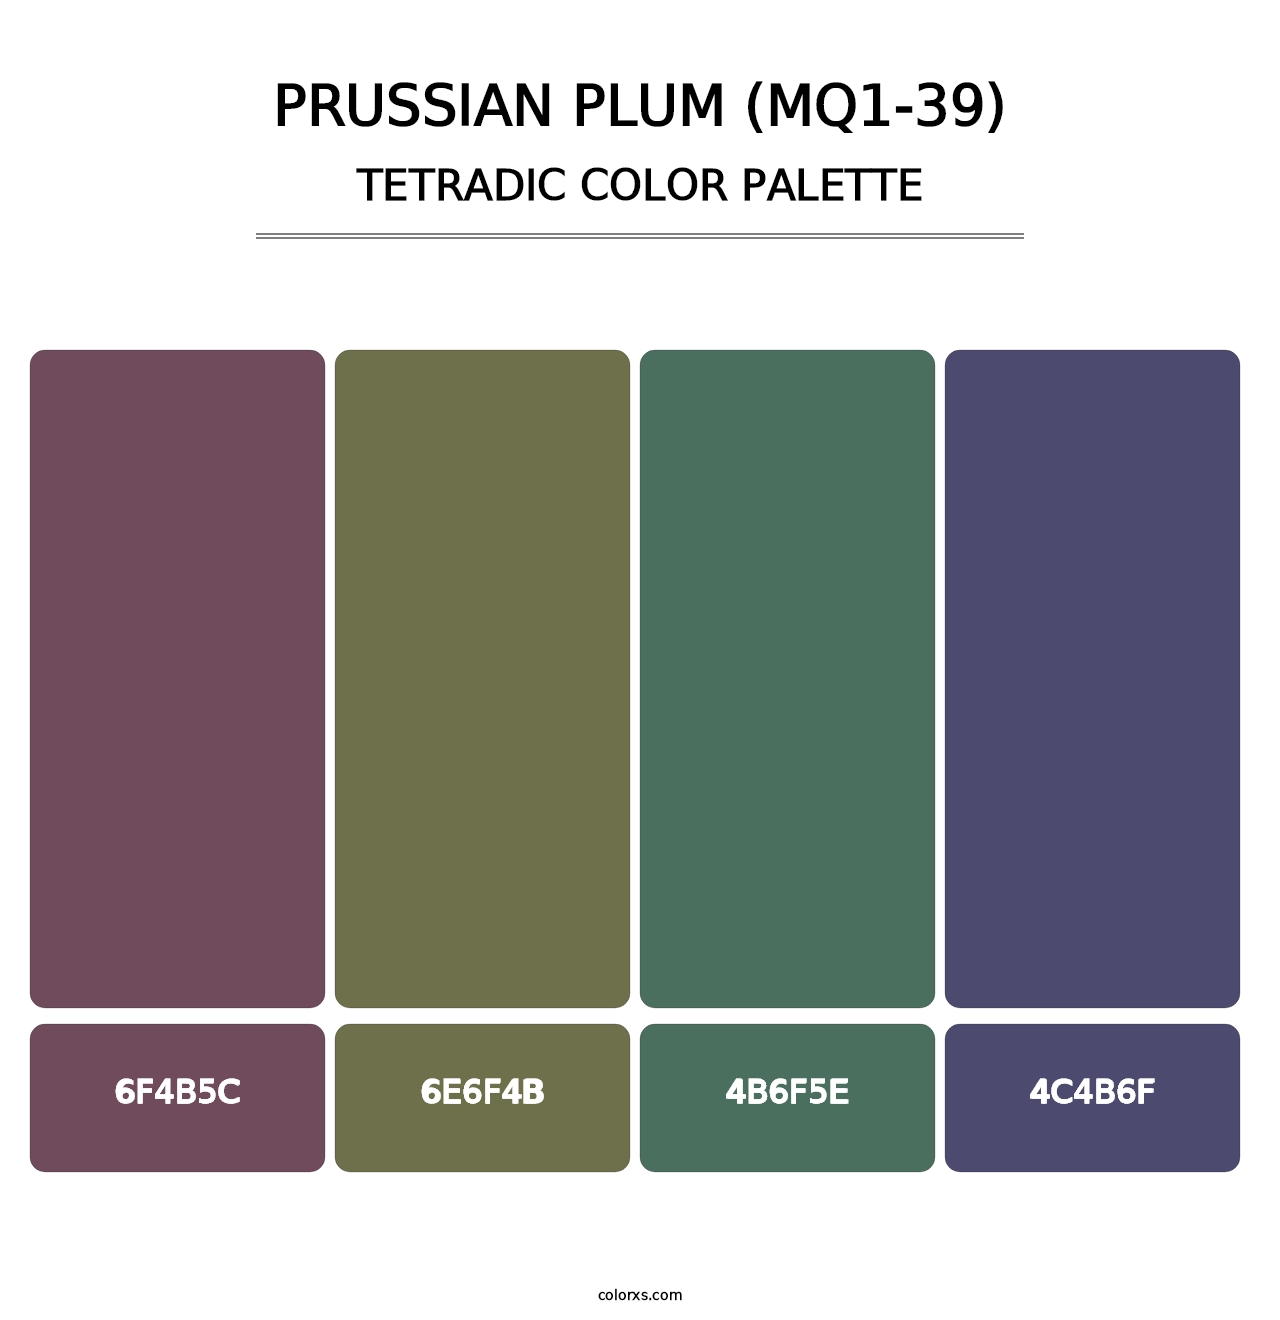 Prussian Plum (MQ1-39) - Tetradic Color Palette